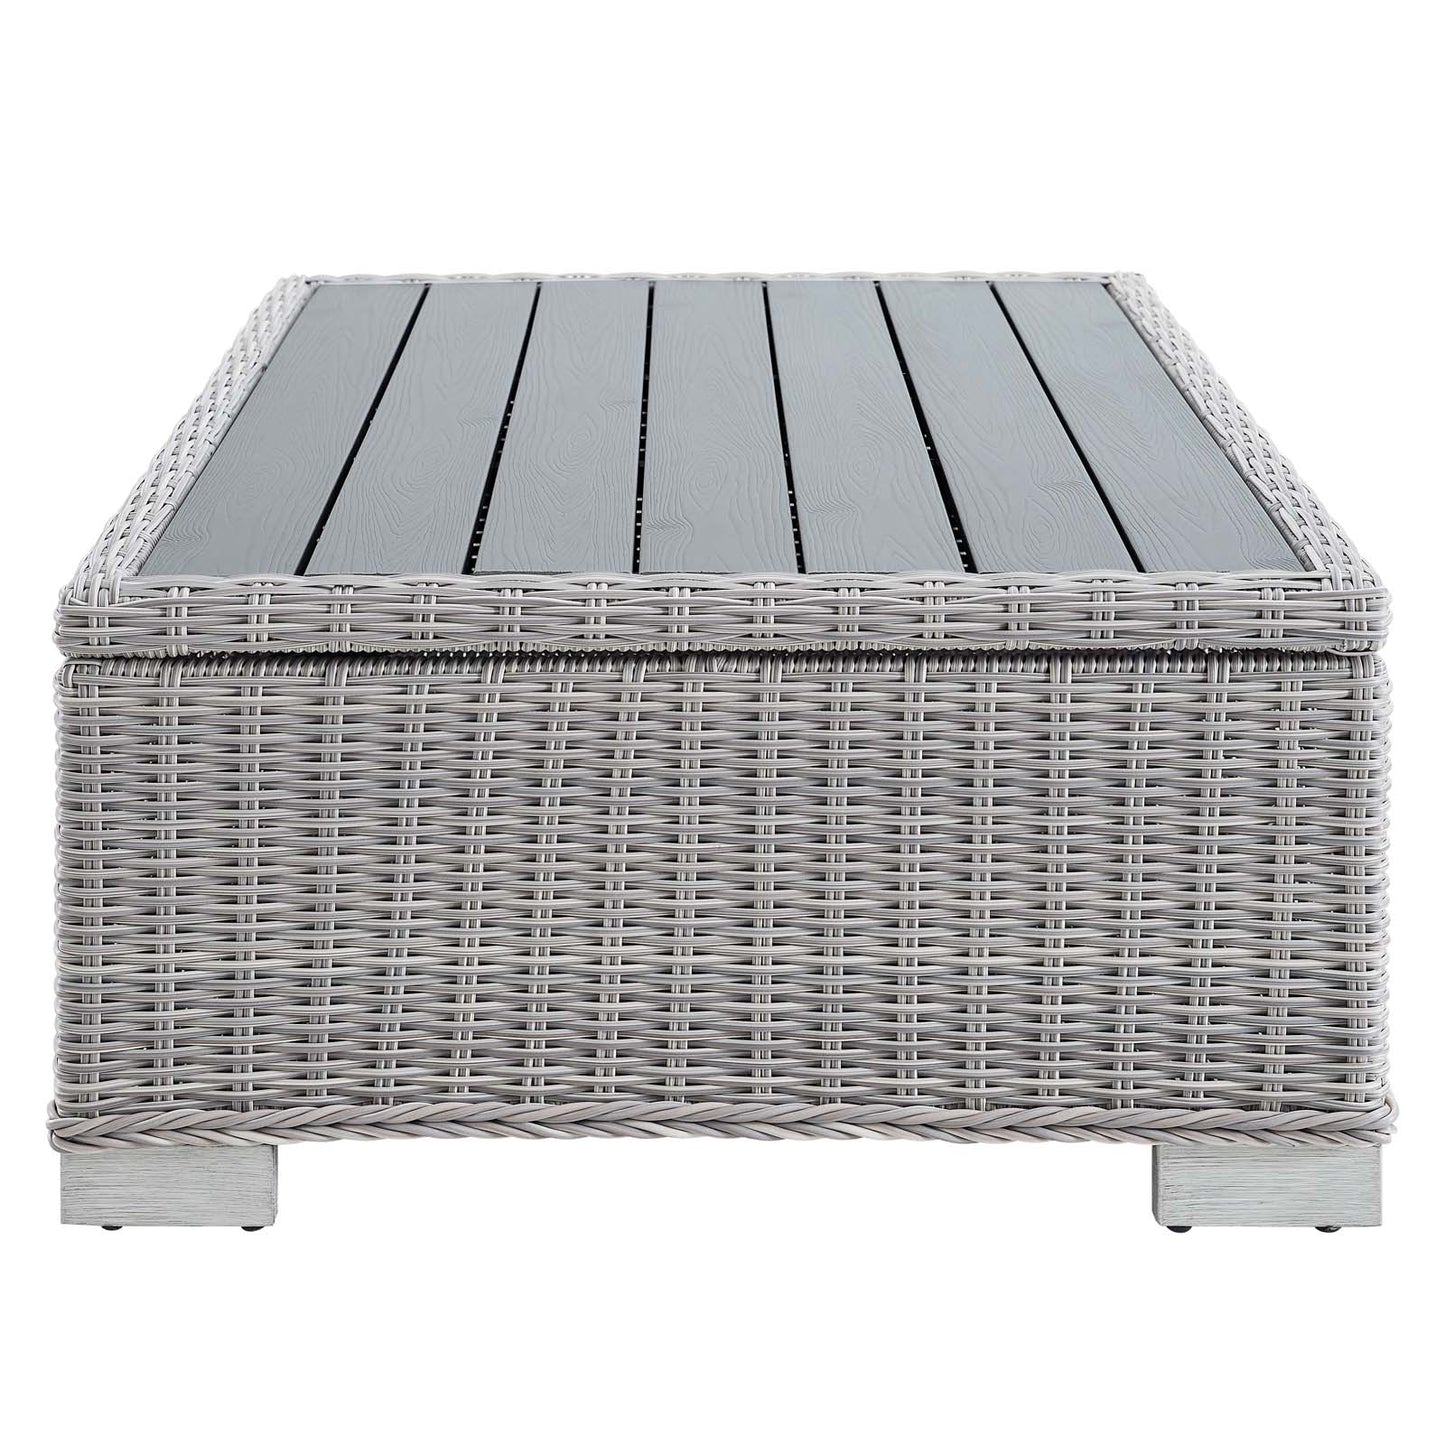 Conway Sunbrella® Outdoor Patio Wicker Rattan 6-Piece Sectional Sofa Set Light Gray Navy EEI-4358-LGR-NAV